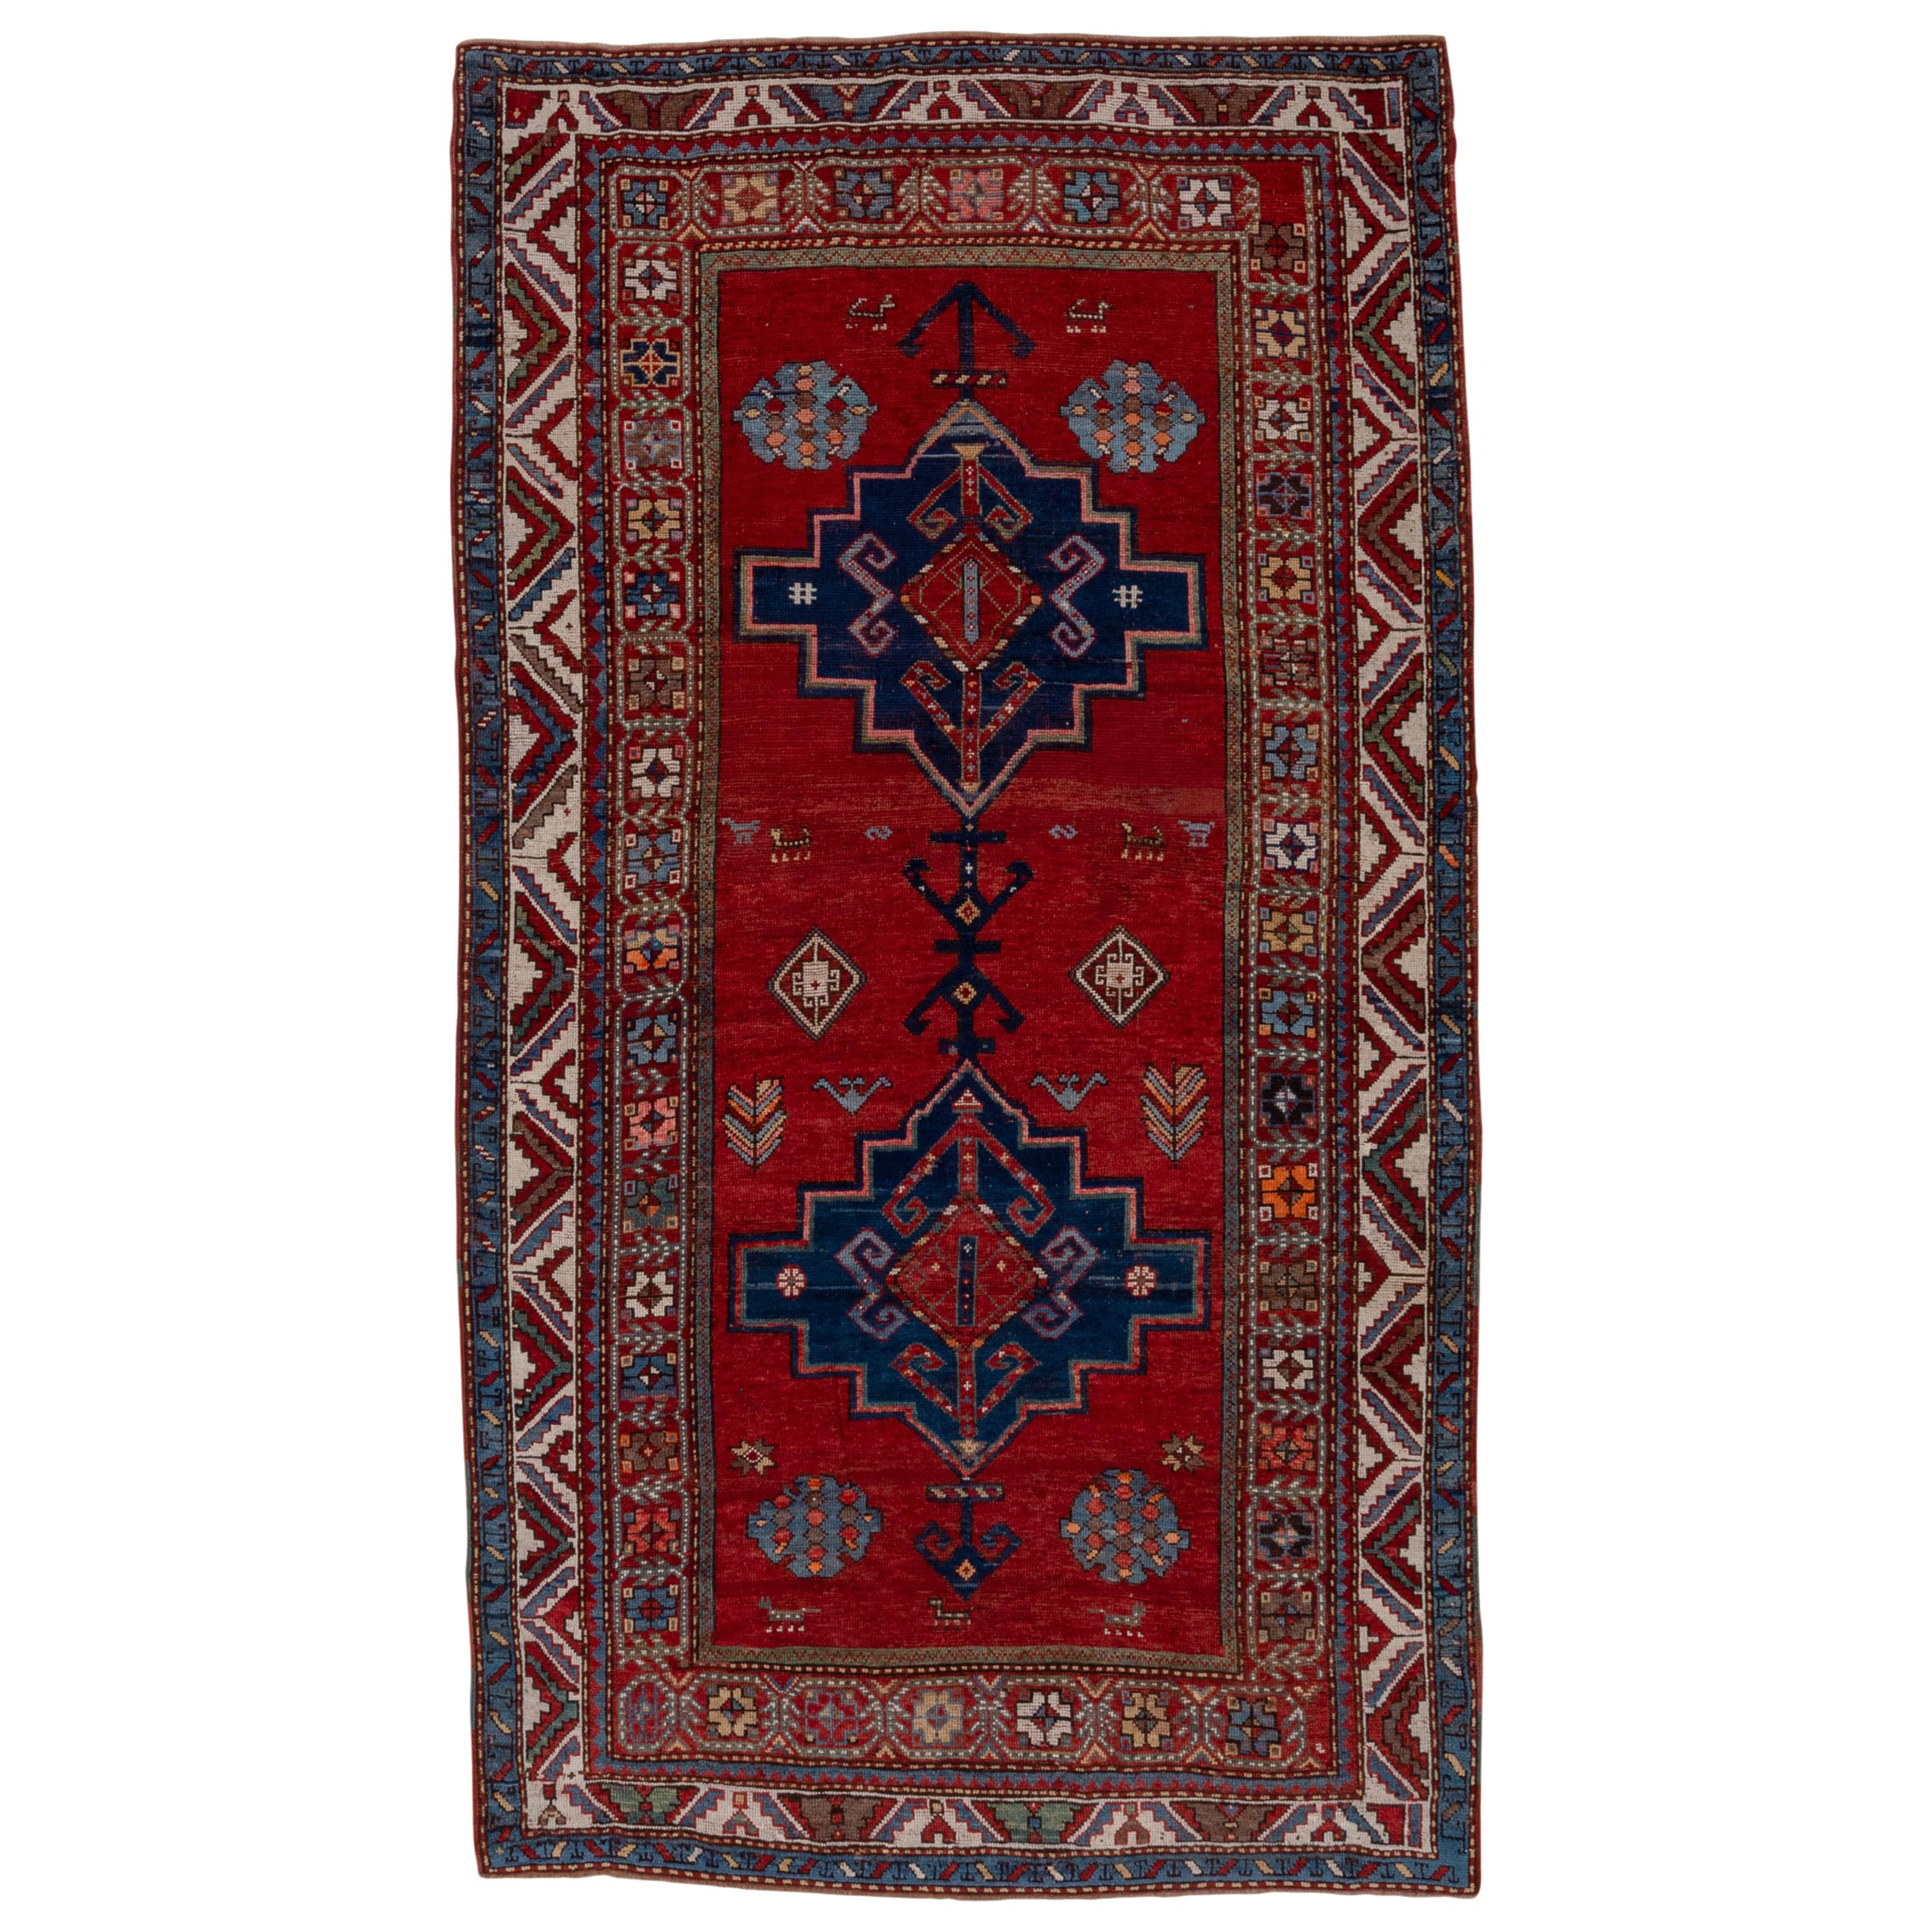 Antique Red Kazak Rug